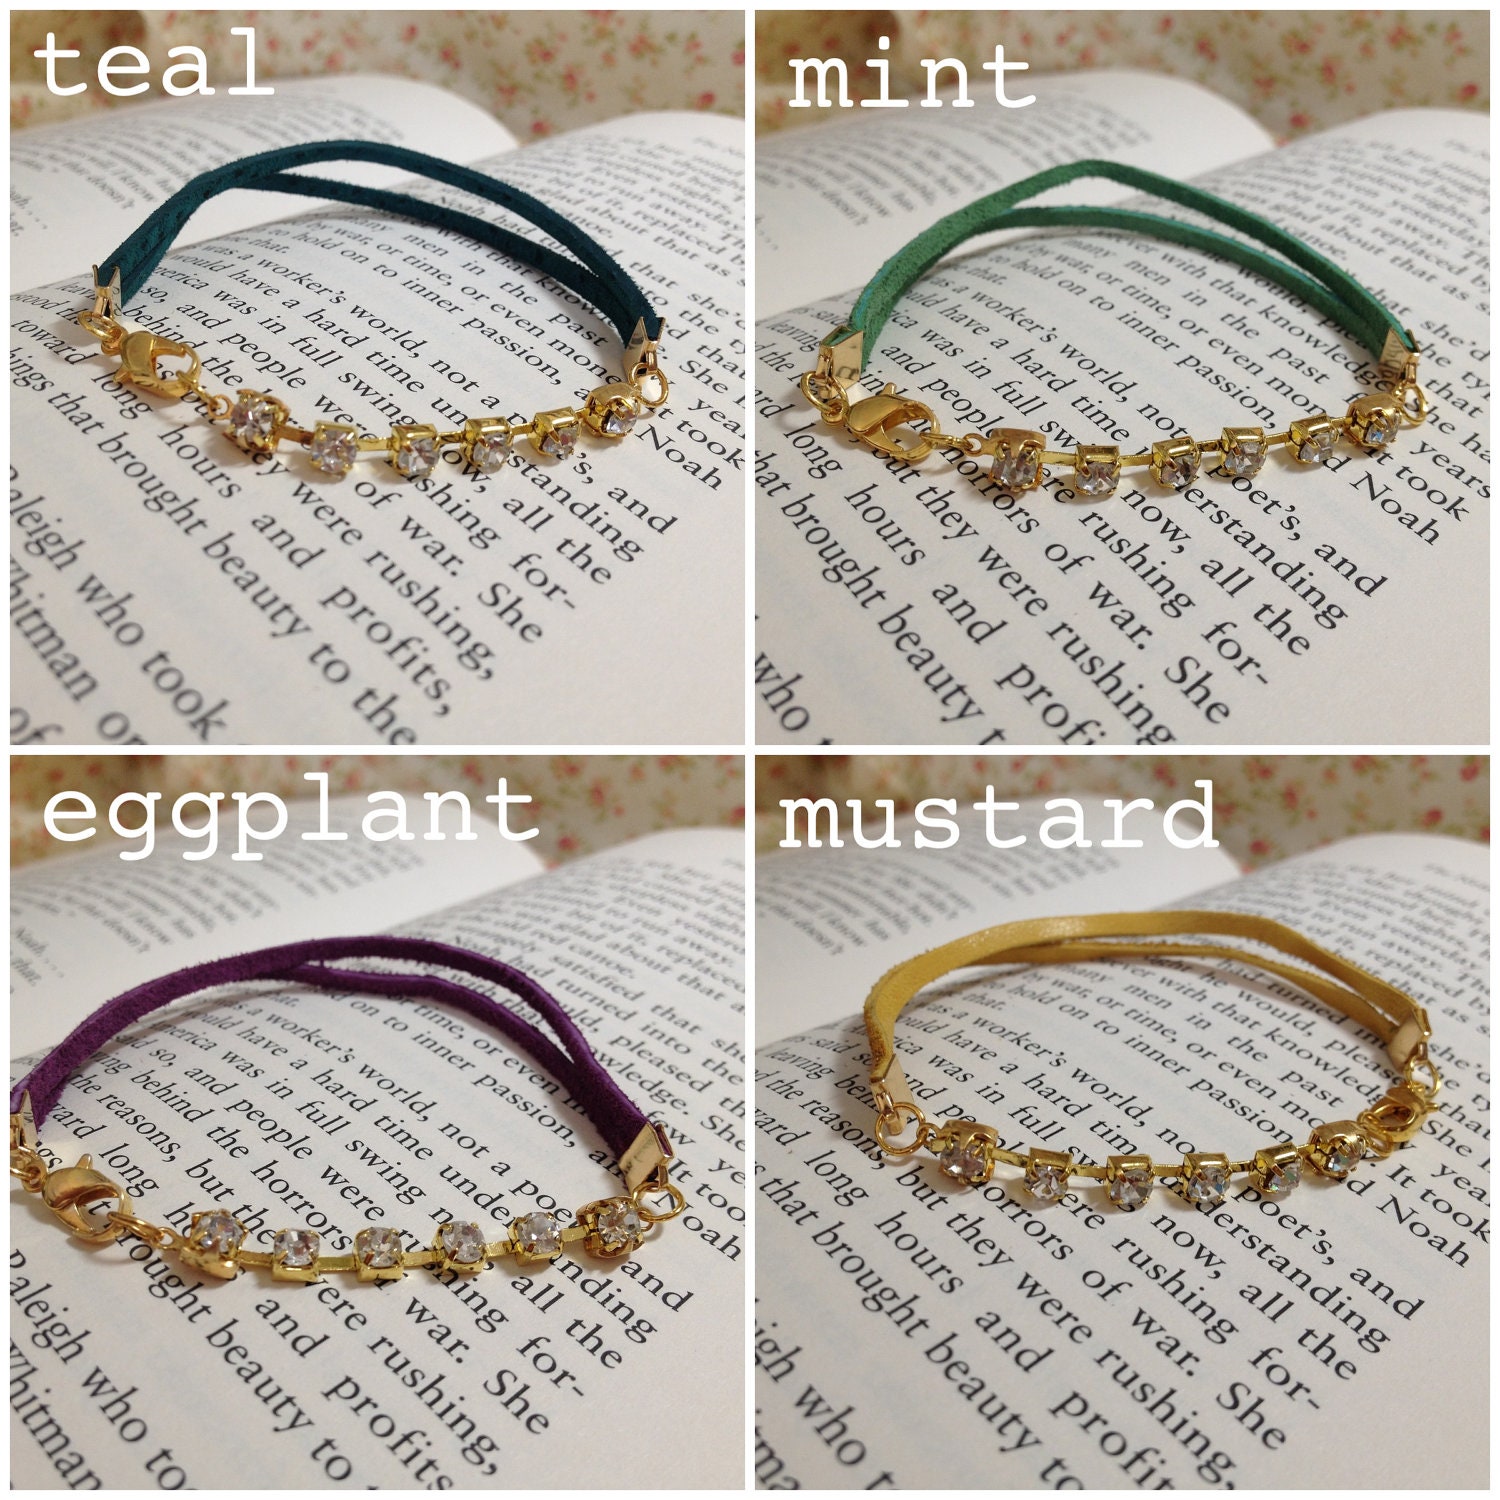 Faux Suede Bracelets with Crystals - Teal/Mint/Eggplant/Mustard - 4mm Crystals - Bracelet 7"